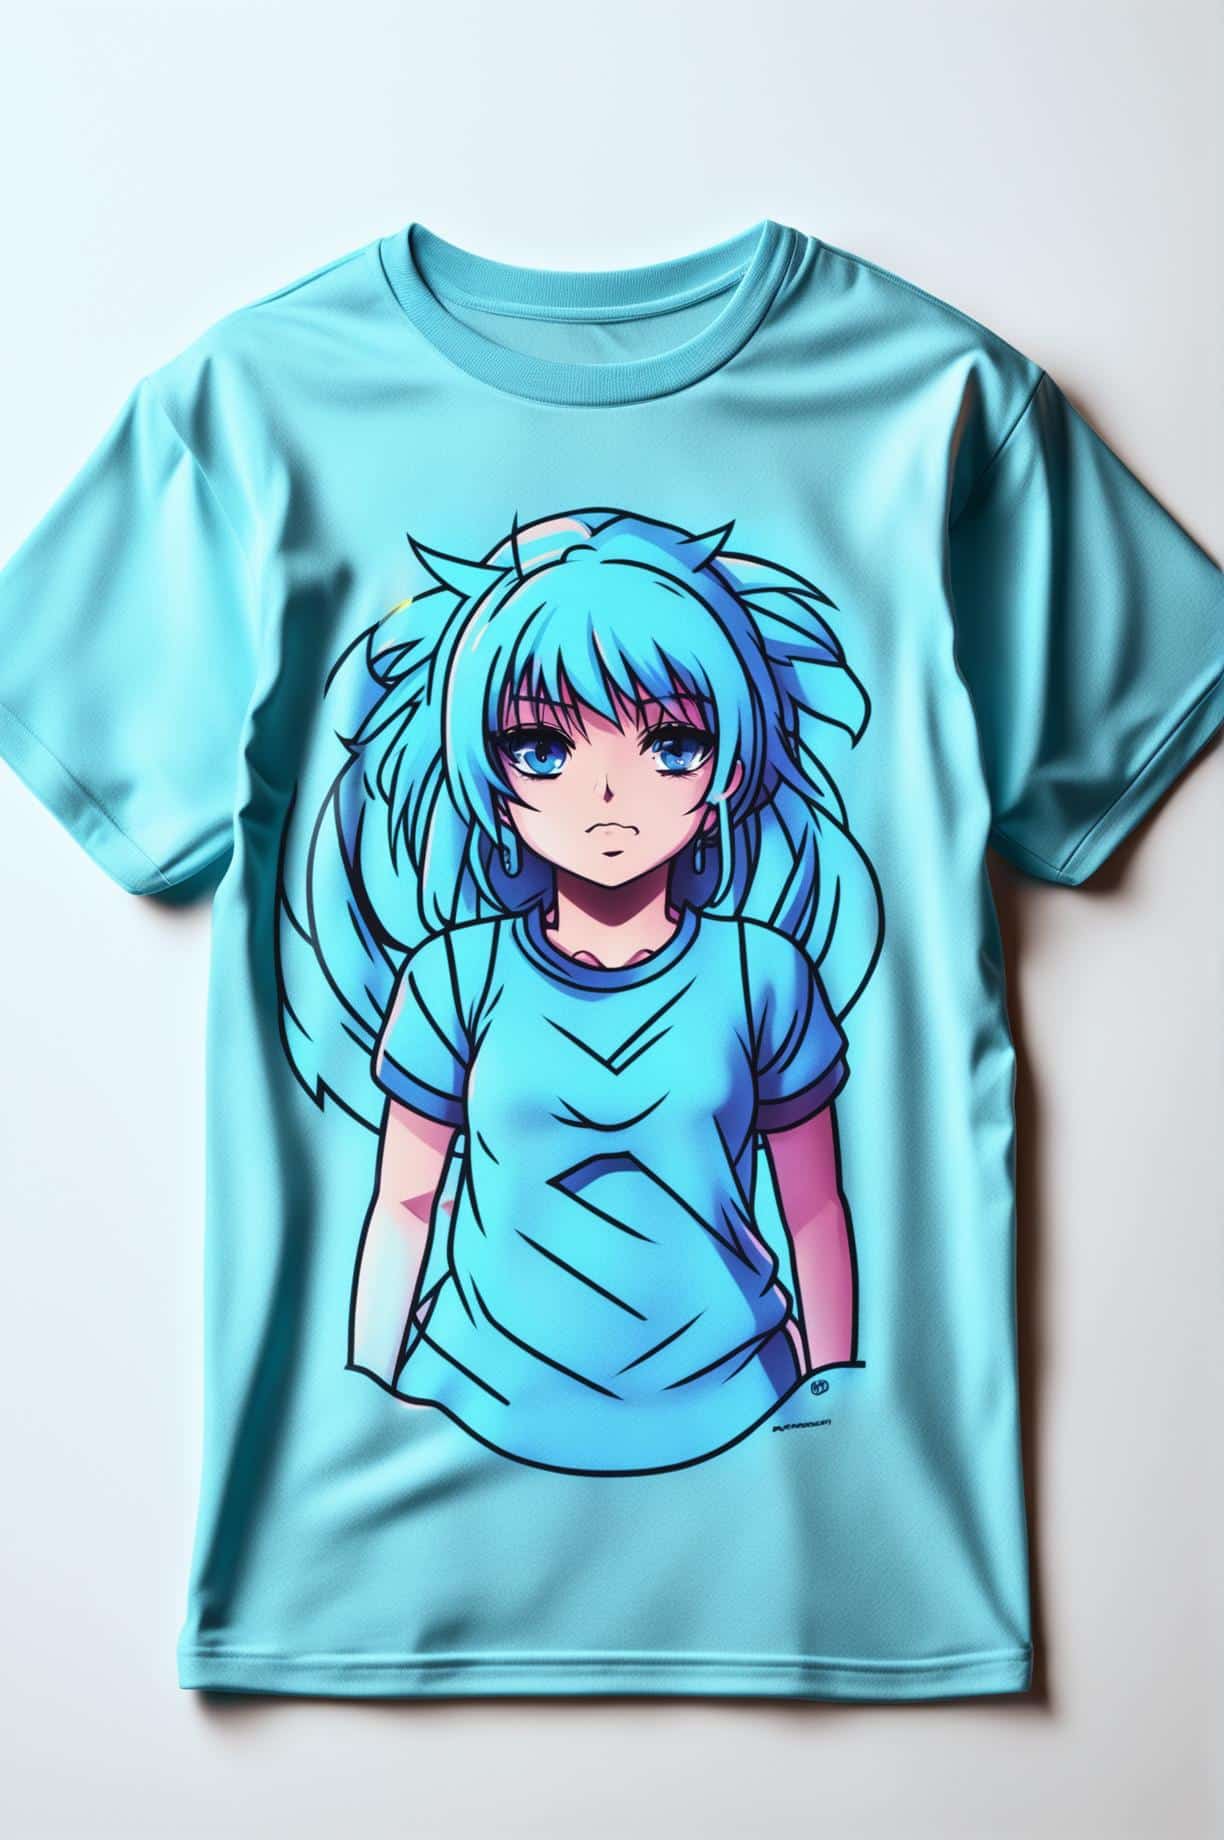 Designer de camisetas de anime